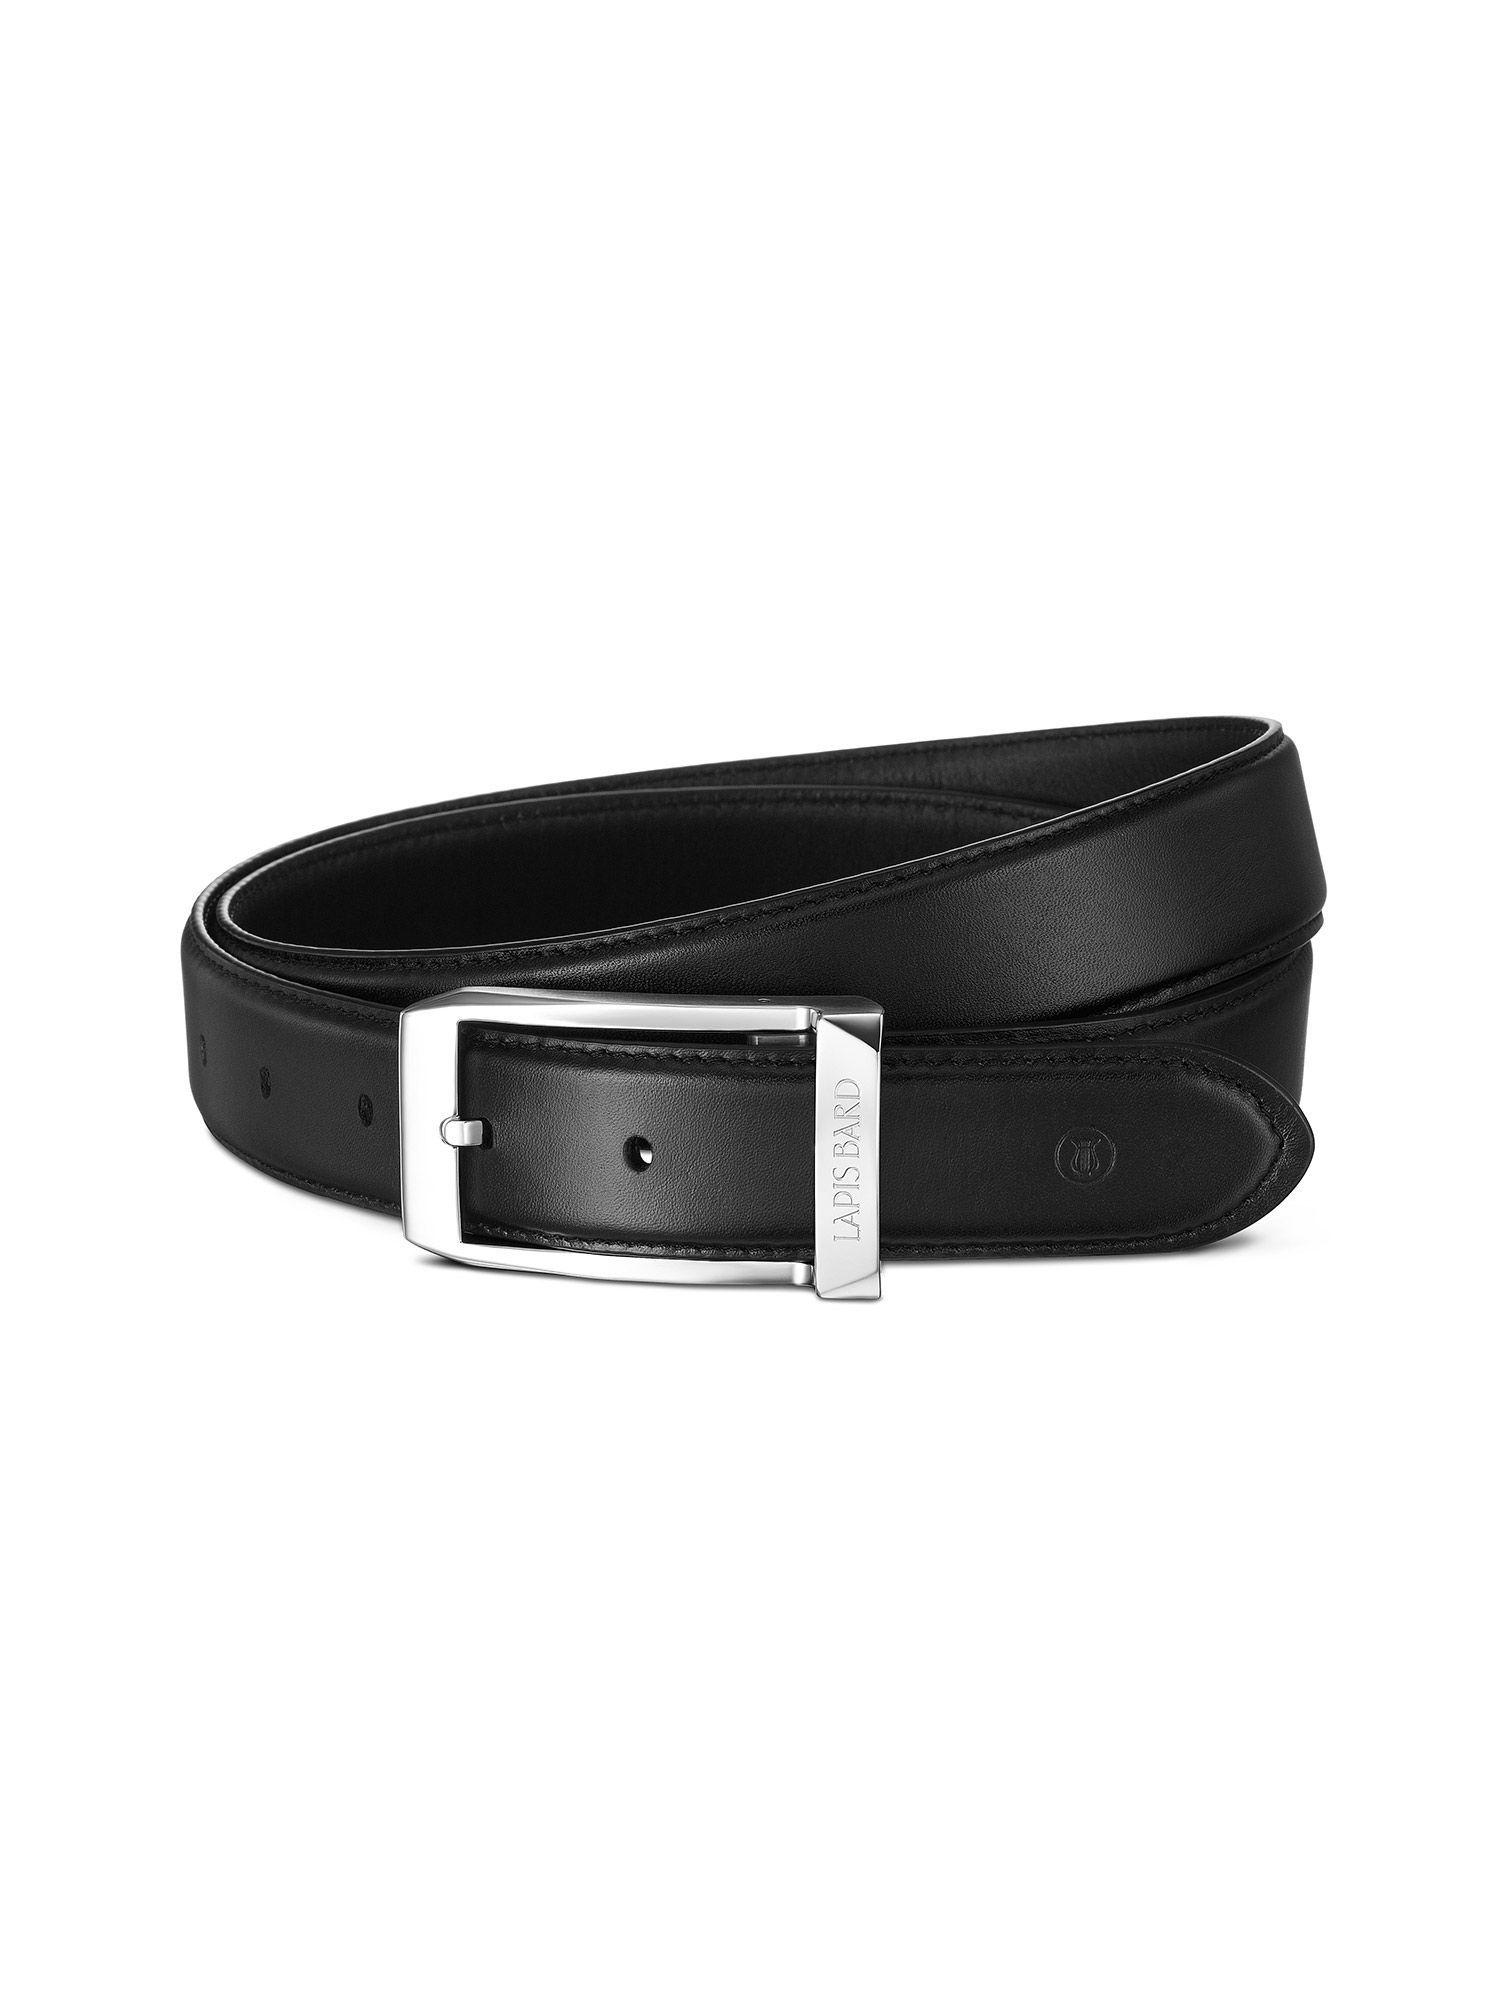 avant garde knightsbridge ip chrome with black strap belt